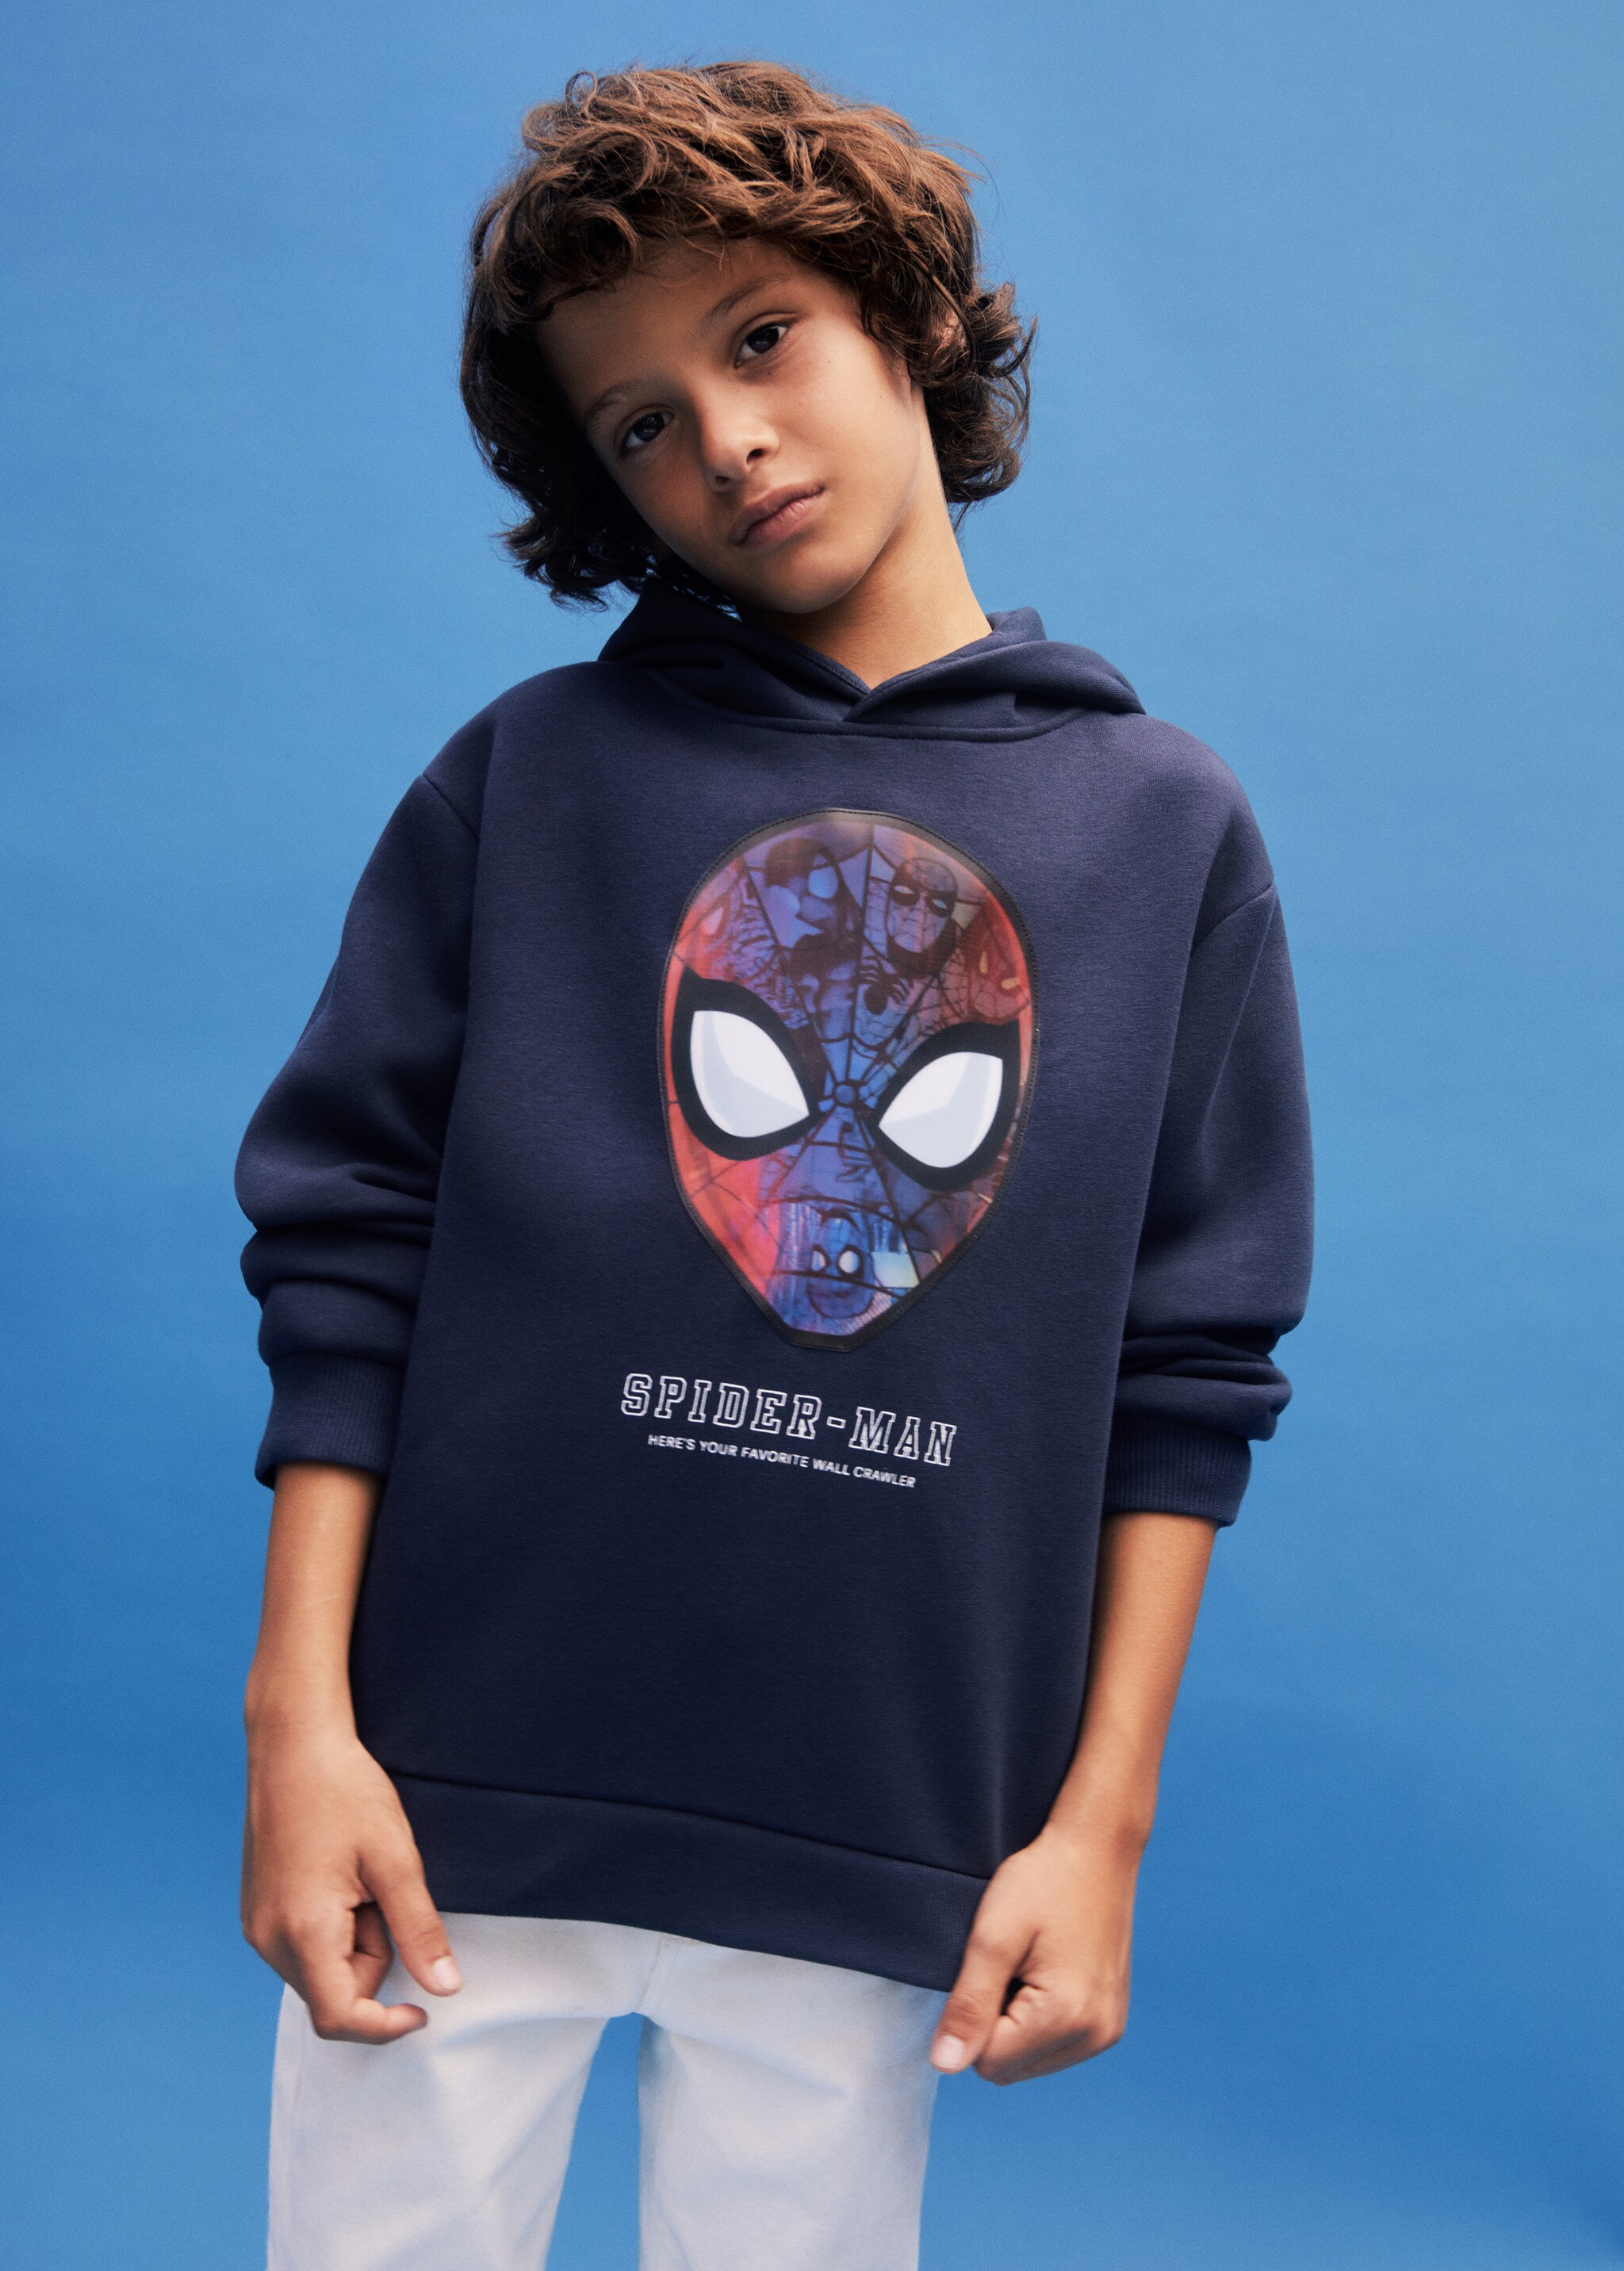 Spider-Man sweatshirt - Details of the article 5